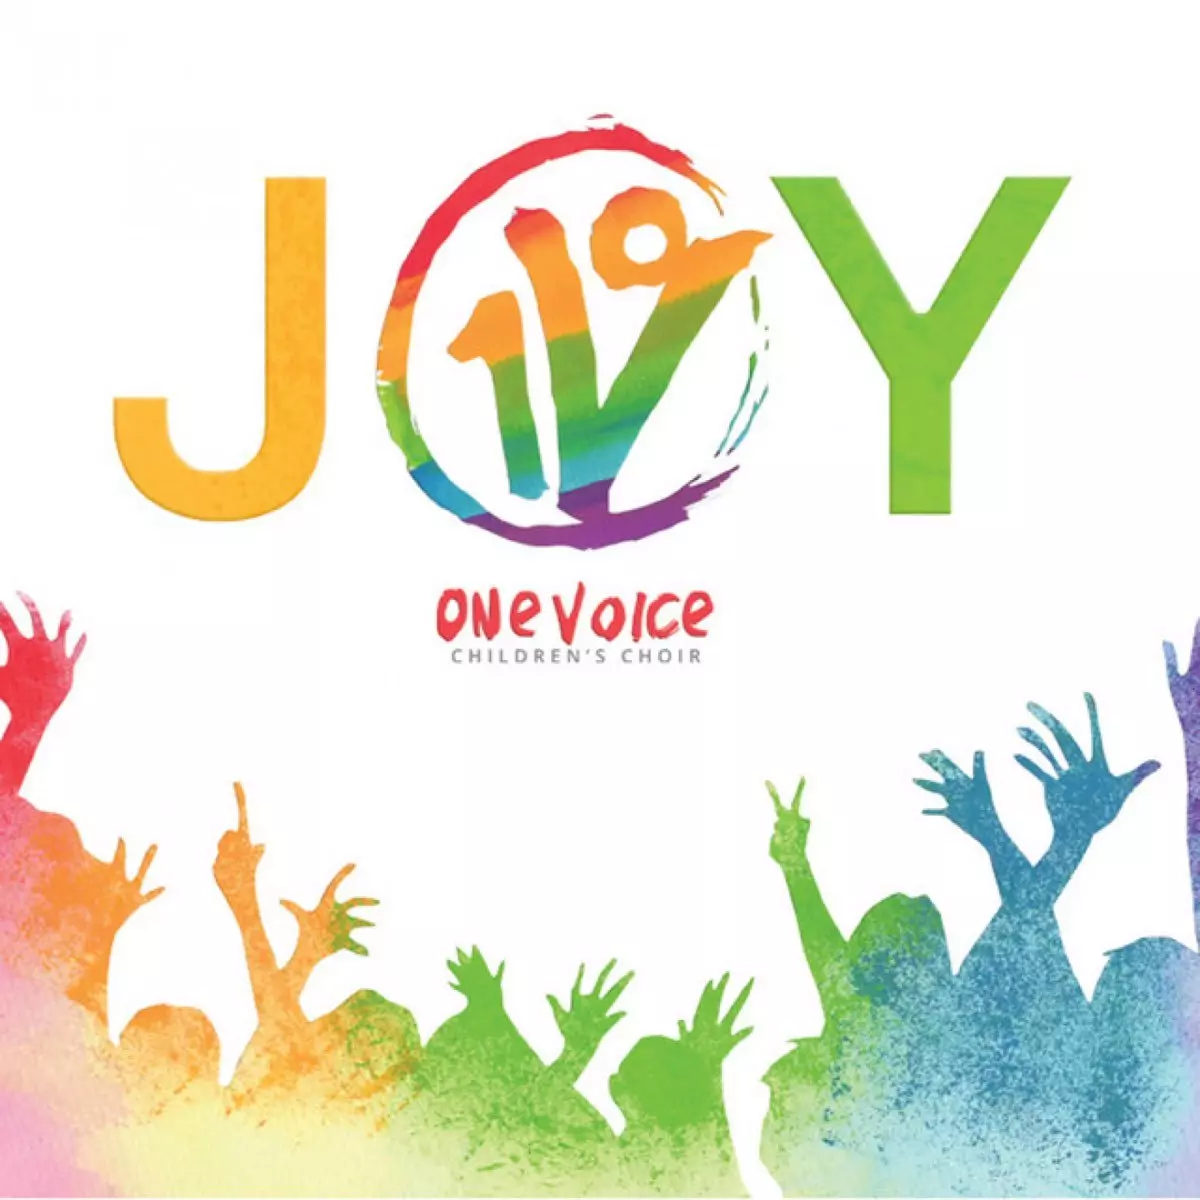 Joy by One Voice Children's Choir on Apple Music